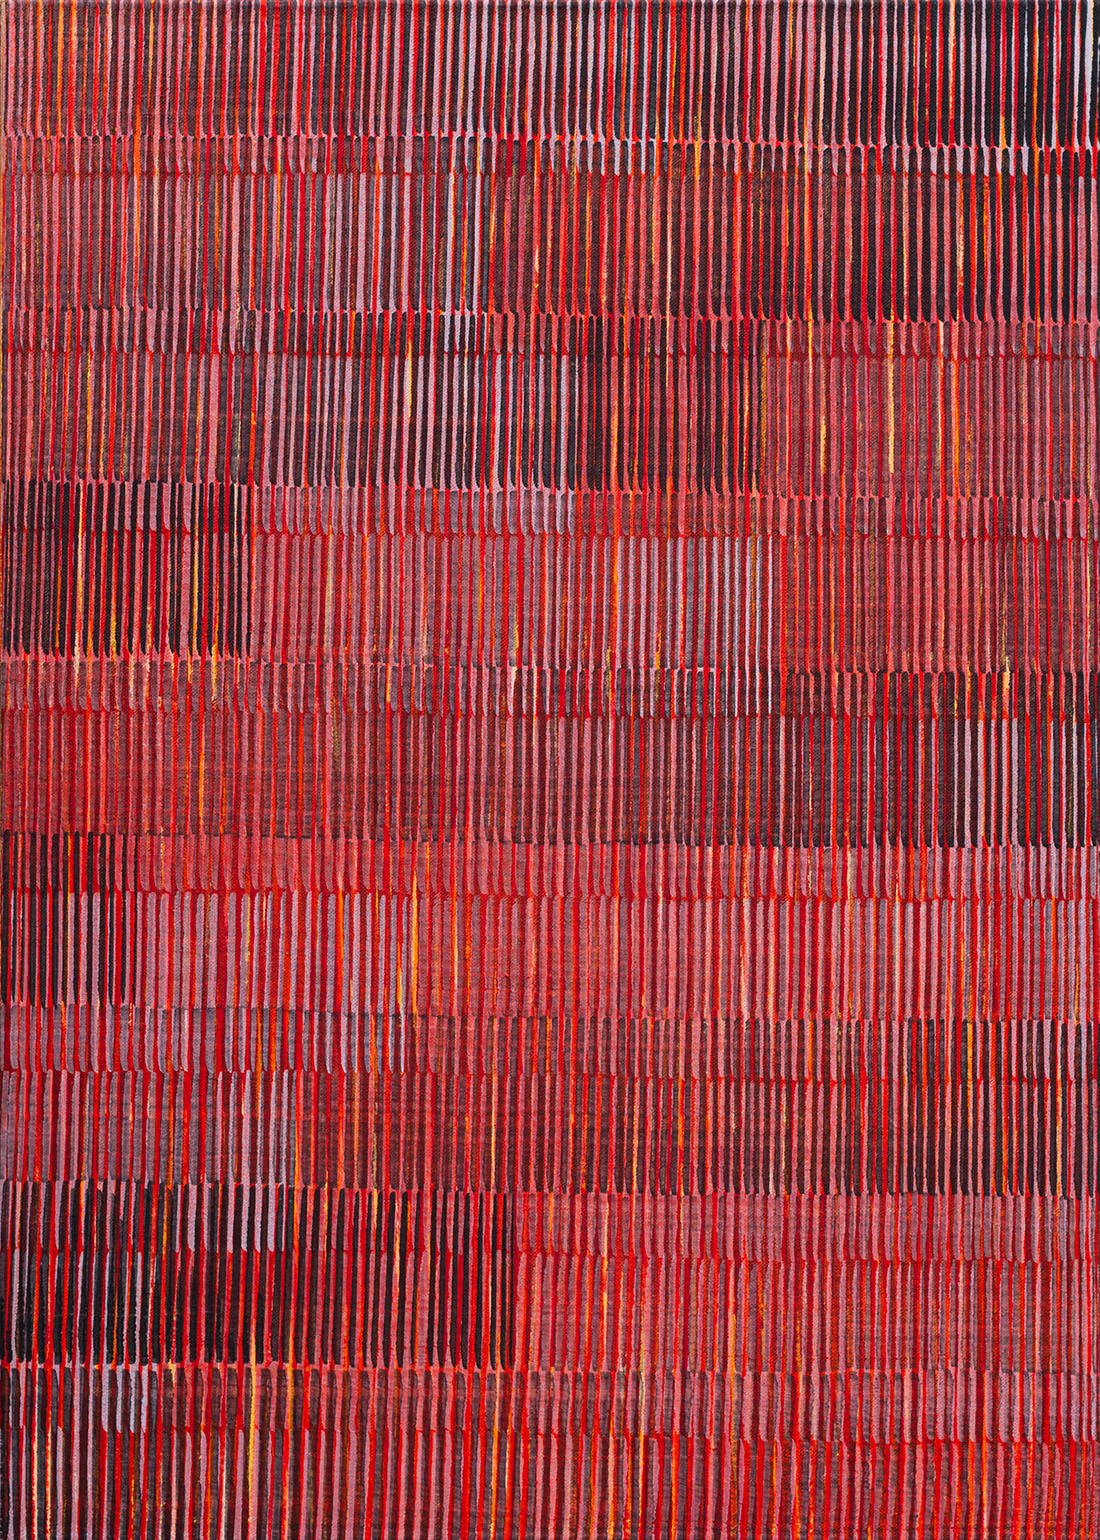 Nikola Dimitrov, Komposition, 2019, Pigmente, Bindemittel auf Leinwand, 70 × 50 cm